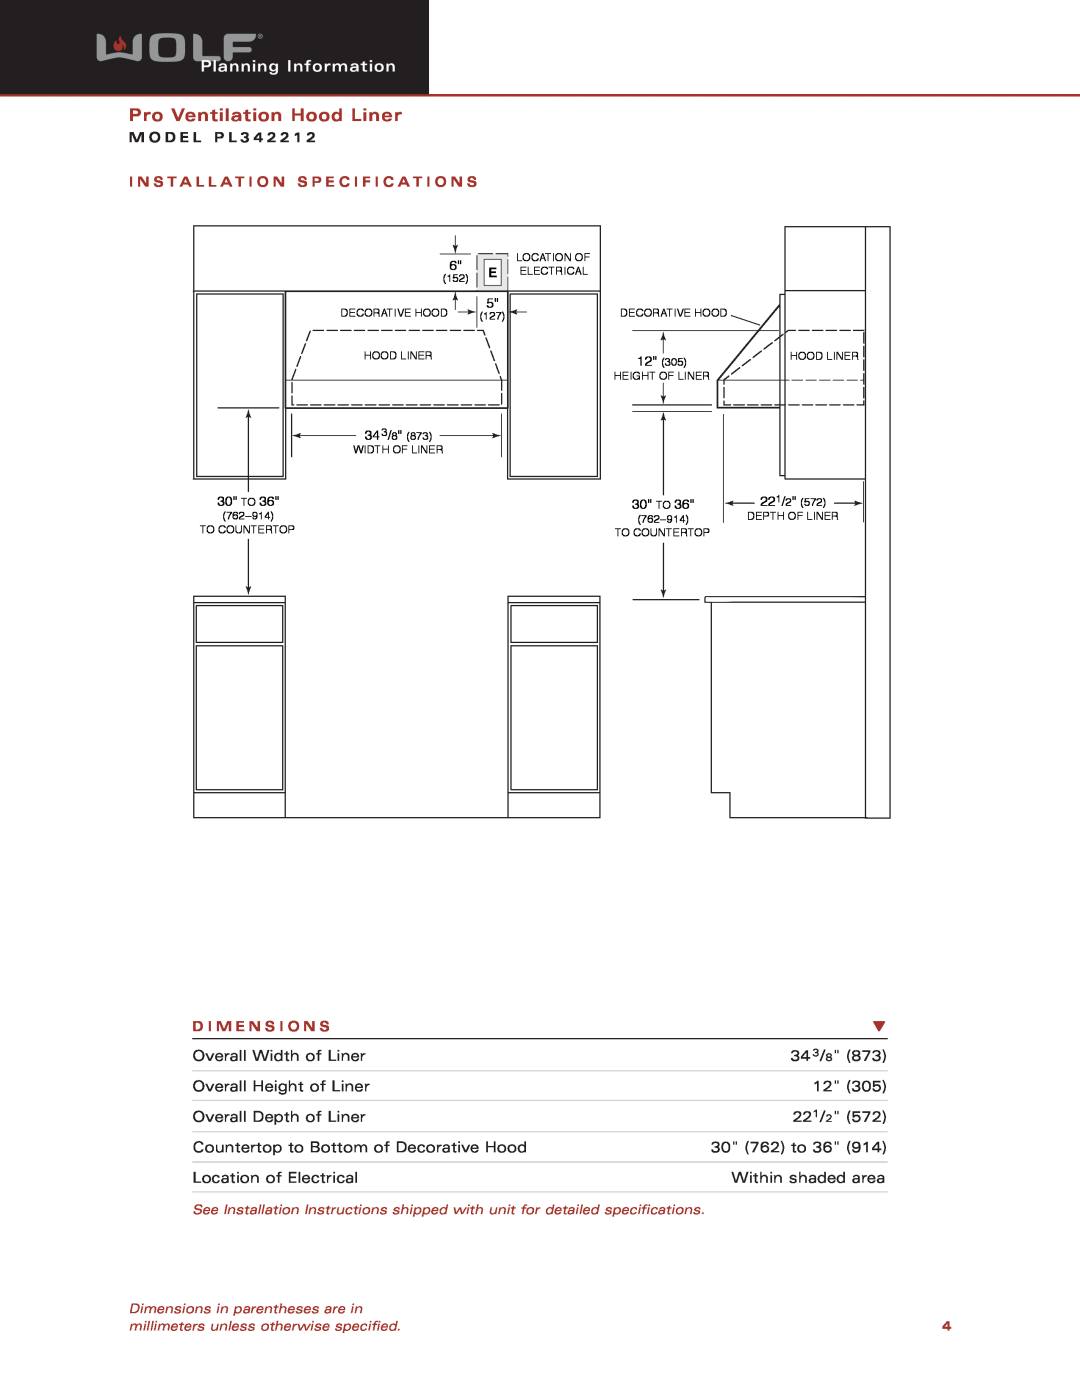 Wolf Appliance Company PL342212 Pro Ventilation Hood Liner, Planning Information, M O D E L P L 3 4, D I M E N S I O N S 